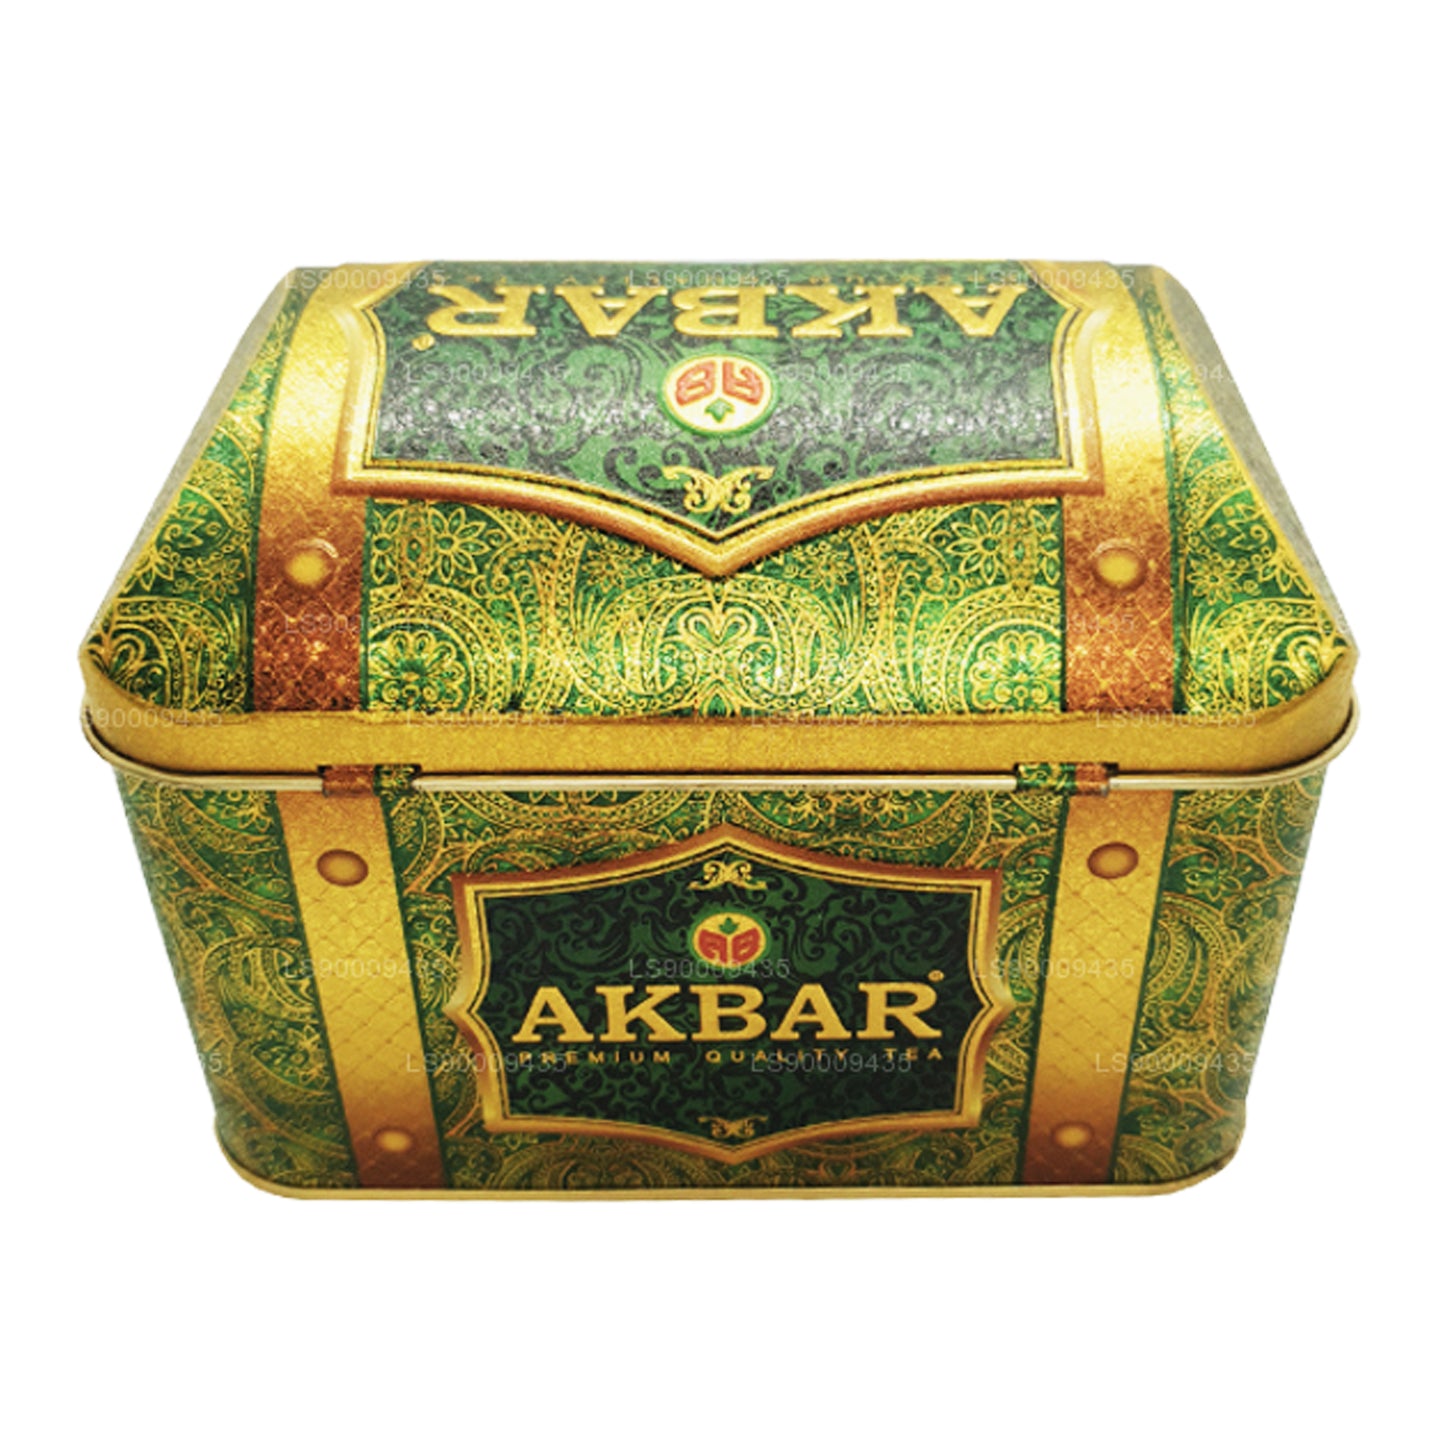 Akbar Exclusive Collection Rich Soursop Schatzkiste (250 g)